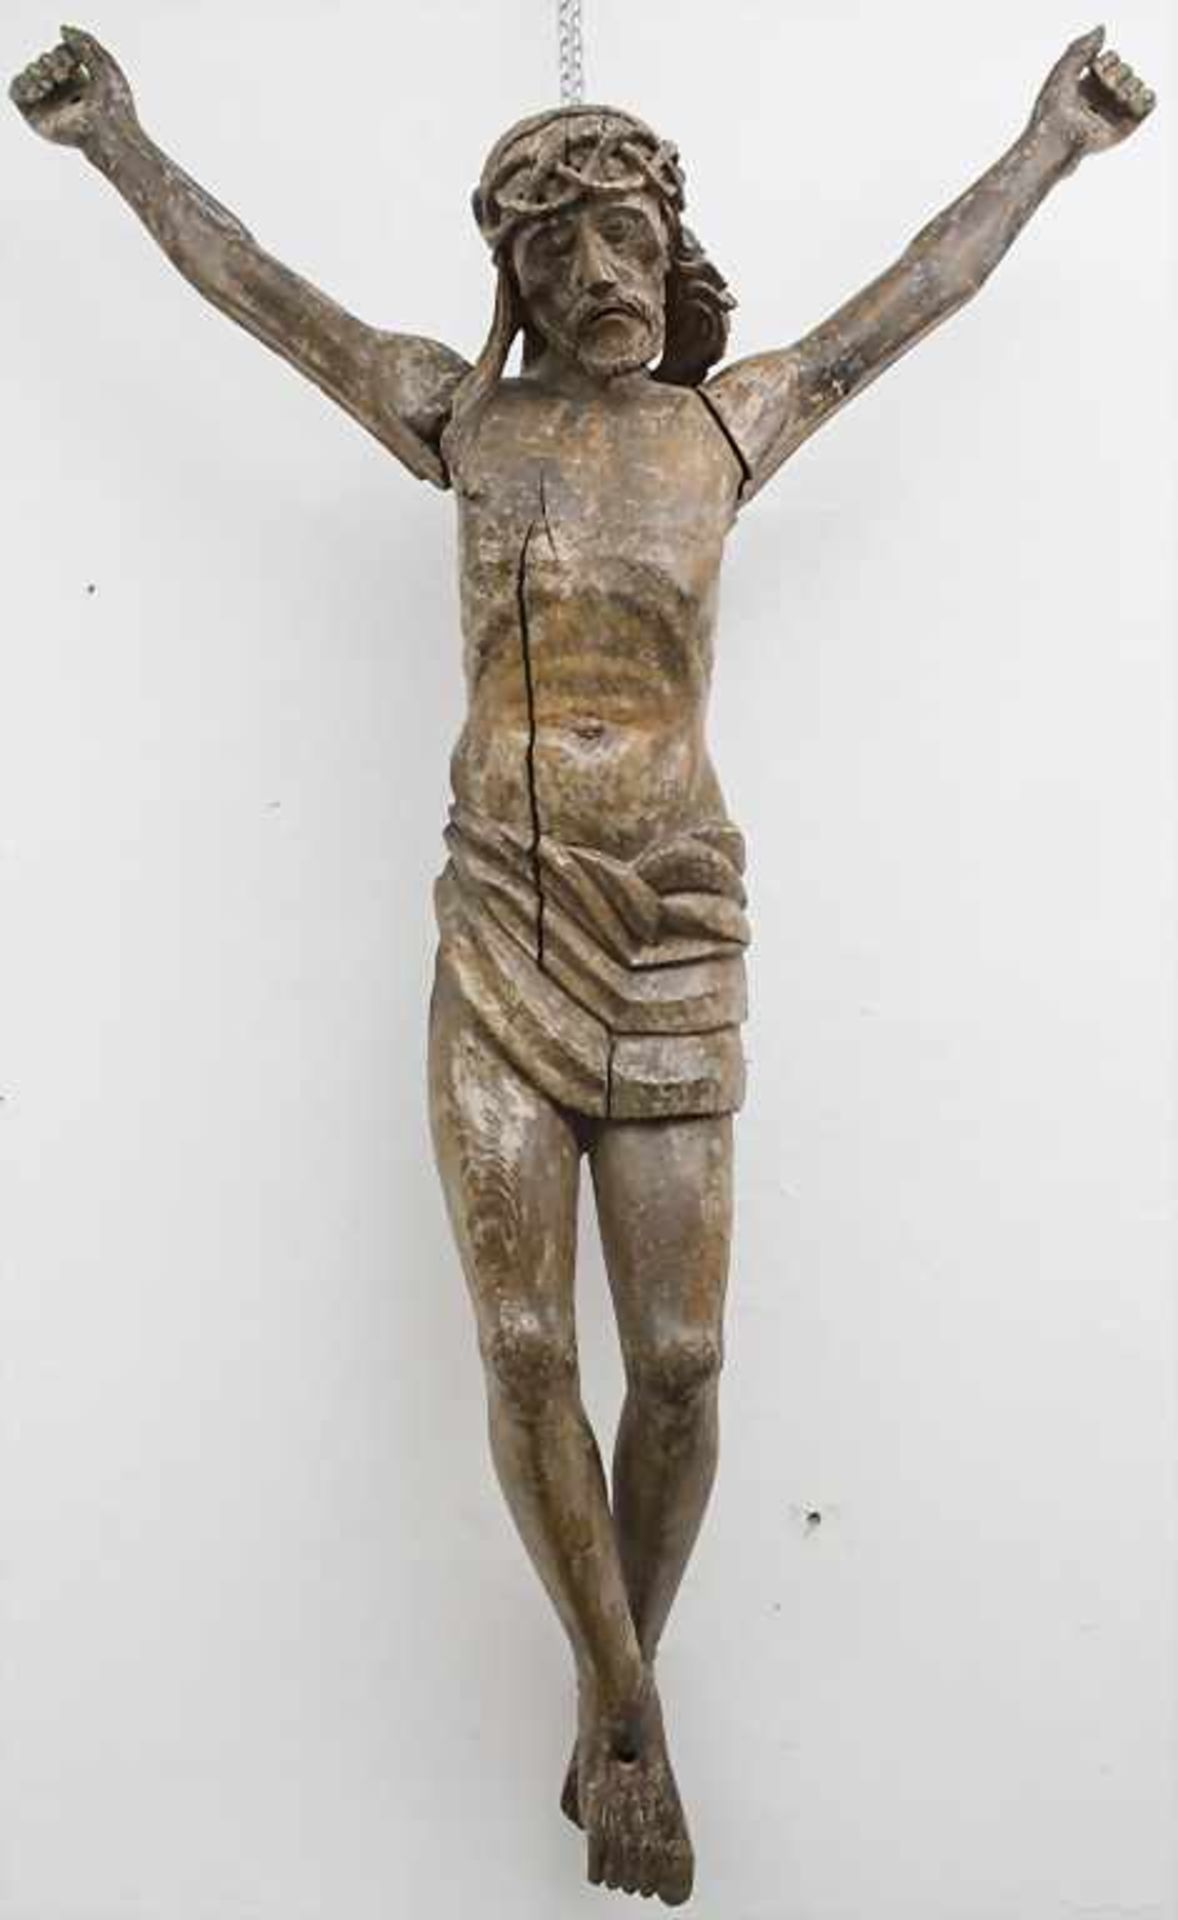 Holzskulptur 'Corpus Christi' / A wooden sculpture 'Corpus Christi', 16-17. Jh. Elsaß-Lothringen,